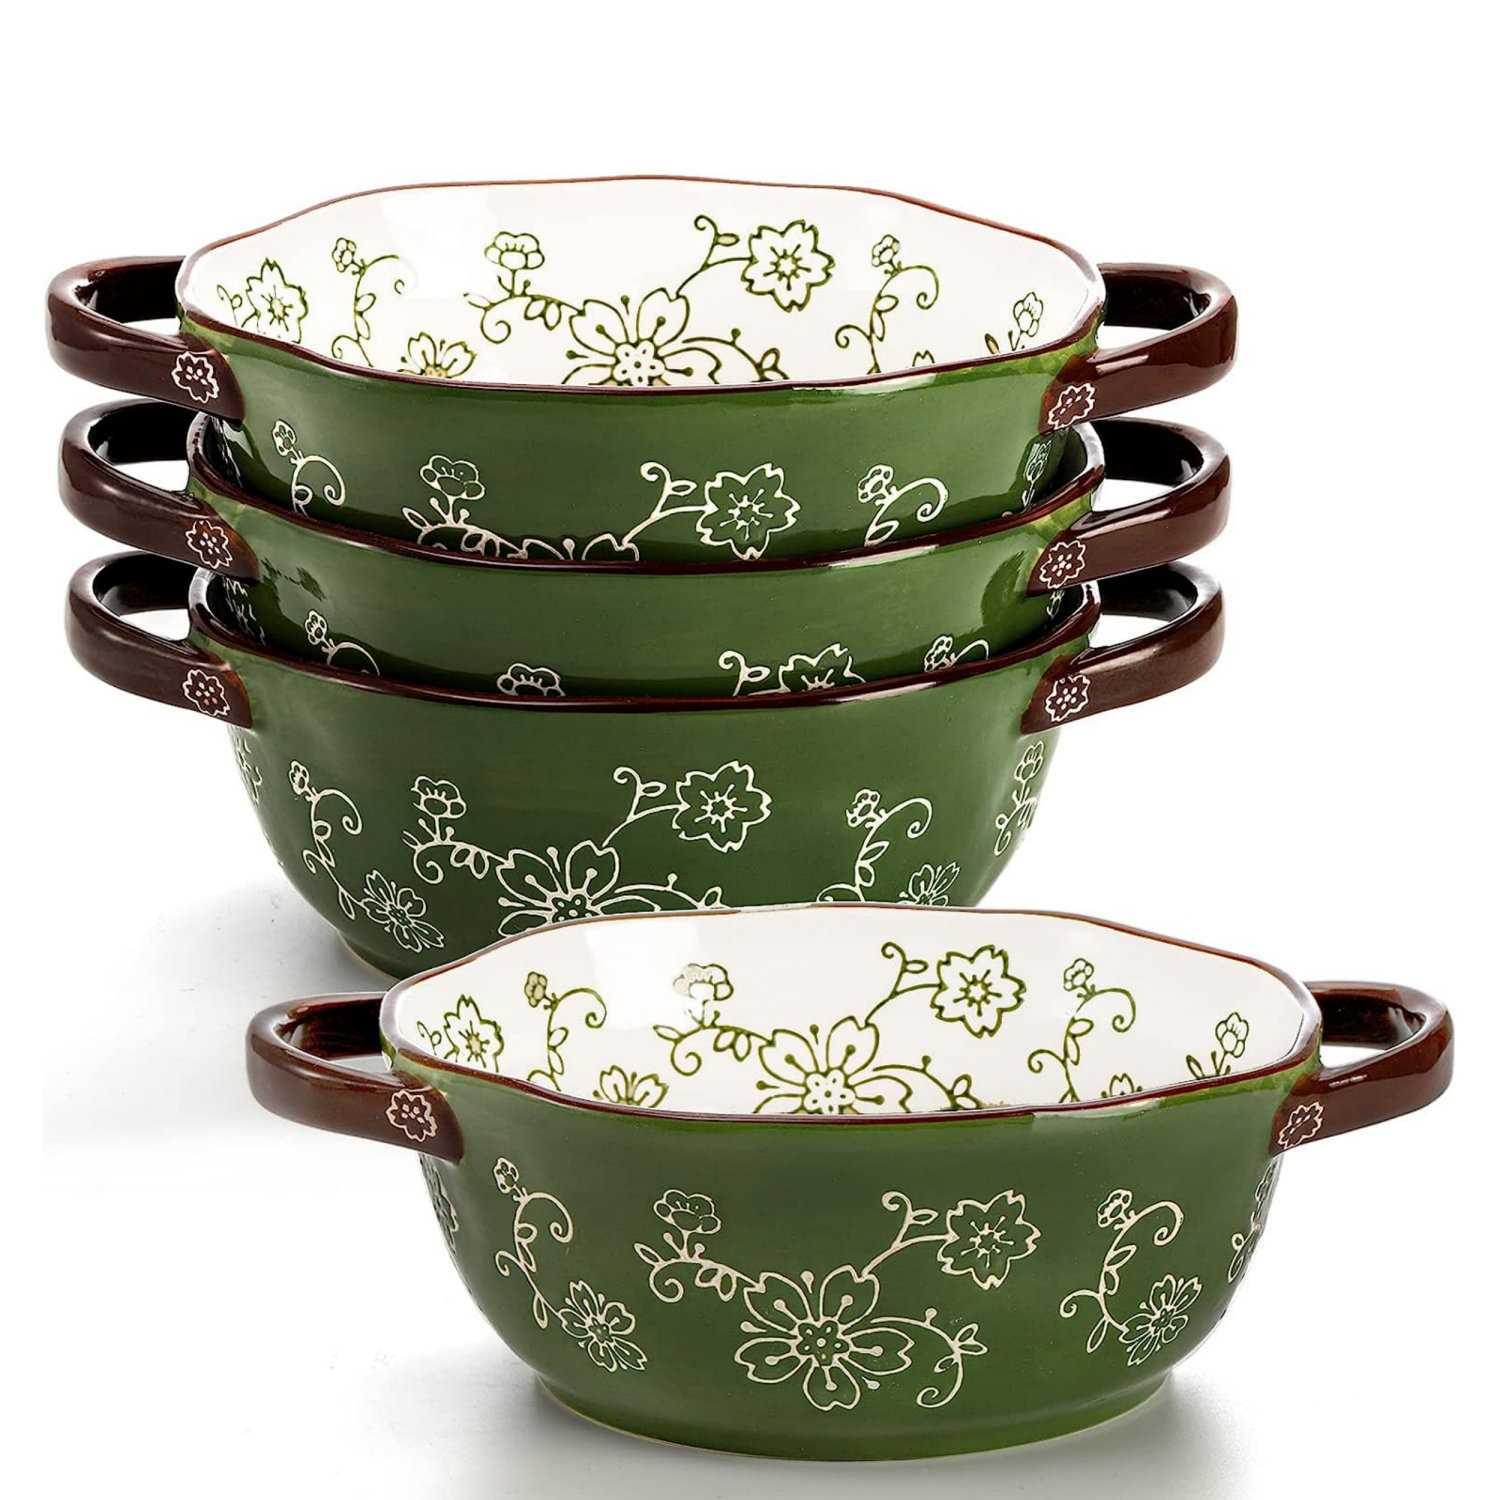 4 PCS Ceramic Soup Bowls with handle 24oz Jumbo Soup Mugs for